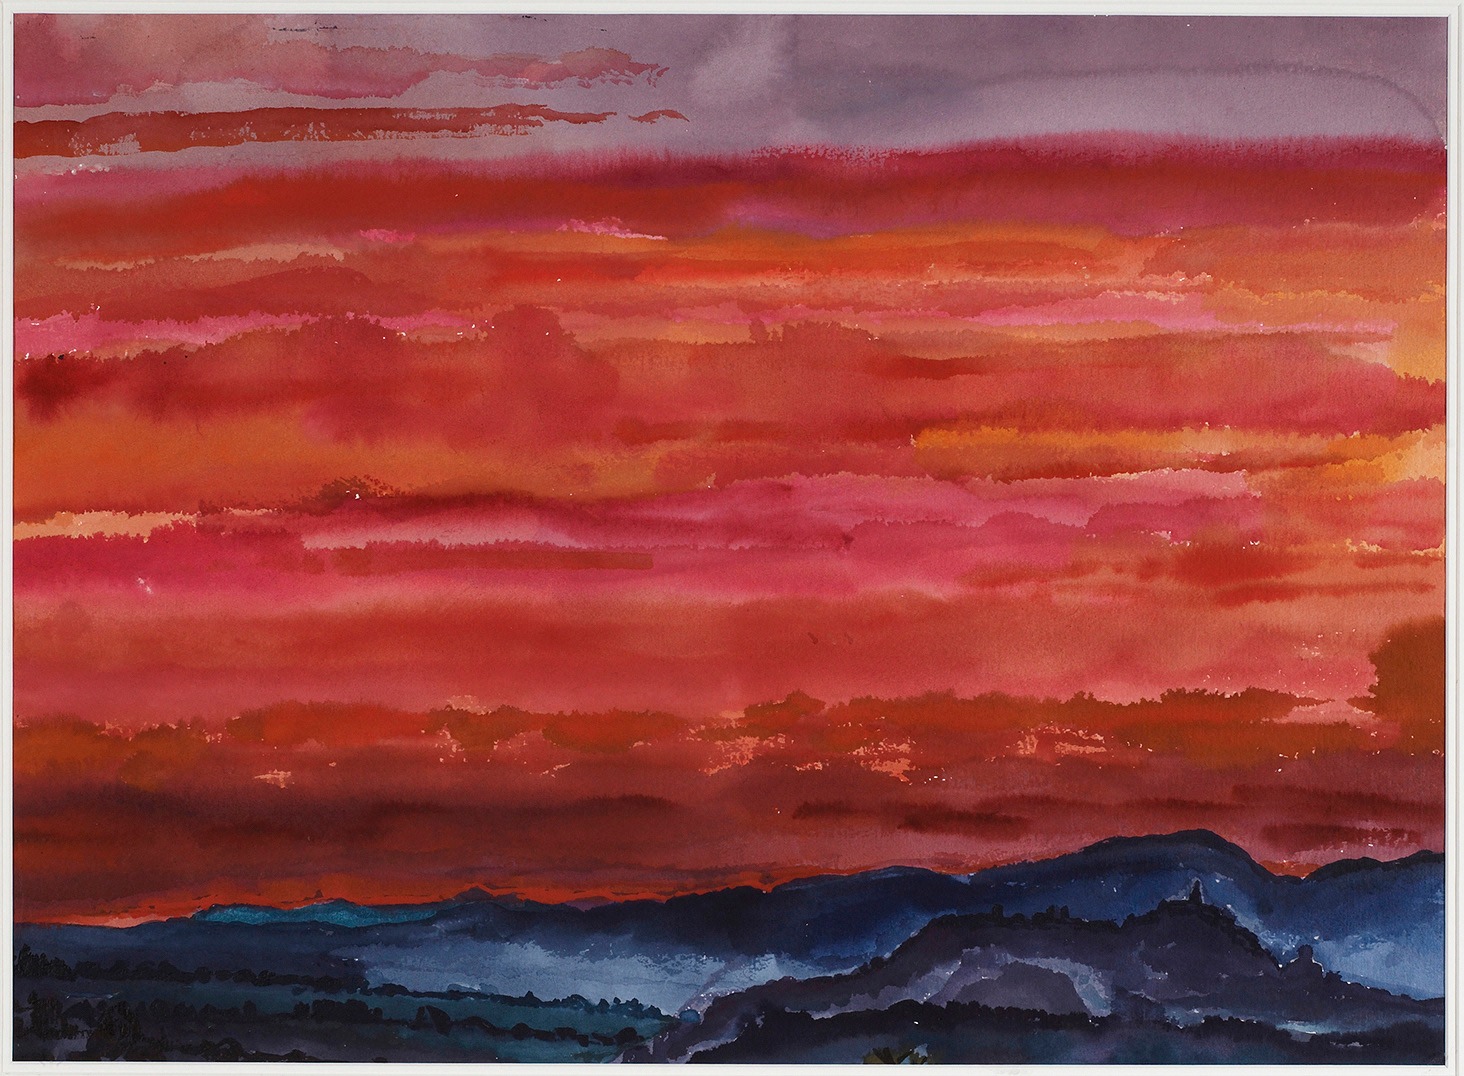 GRAHAM NICKSON British, b. 1946 . Crimson Sky      Watercolor on paper 22 x 30 in. (55.9 x 76.2 cm)